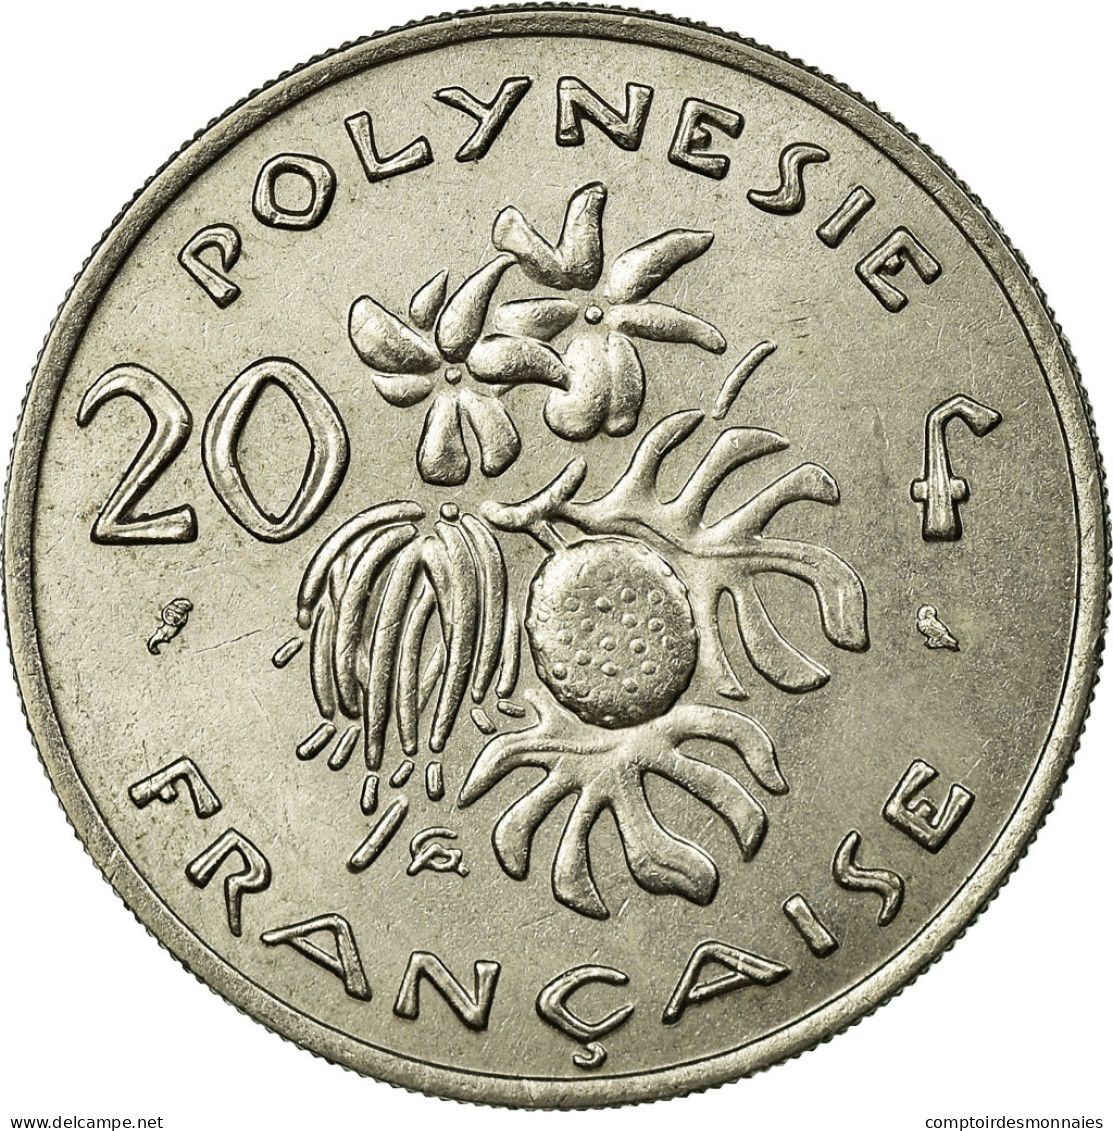 Monnaie, French Polynesia, 20 Francs, 1967, Paris, TTB, Nickel, KM:6 - Französisch-Polynesien